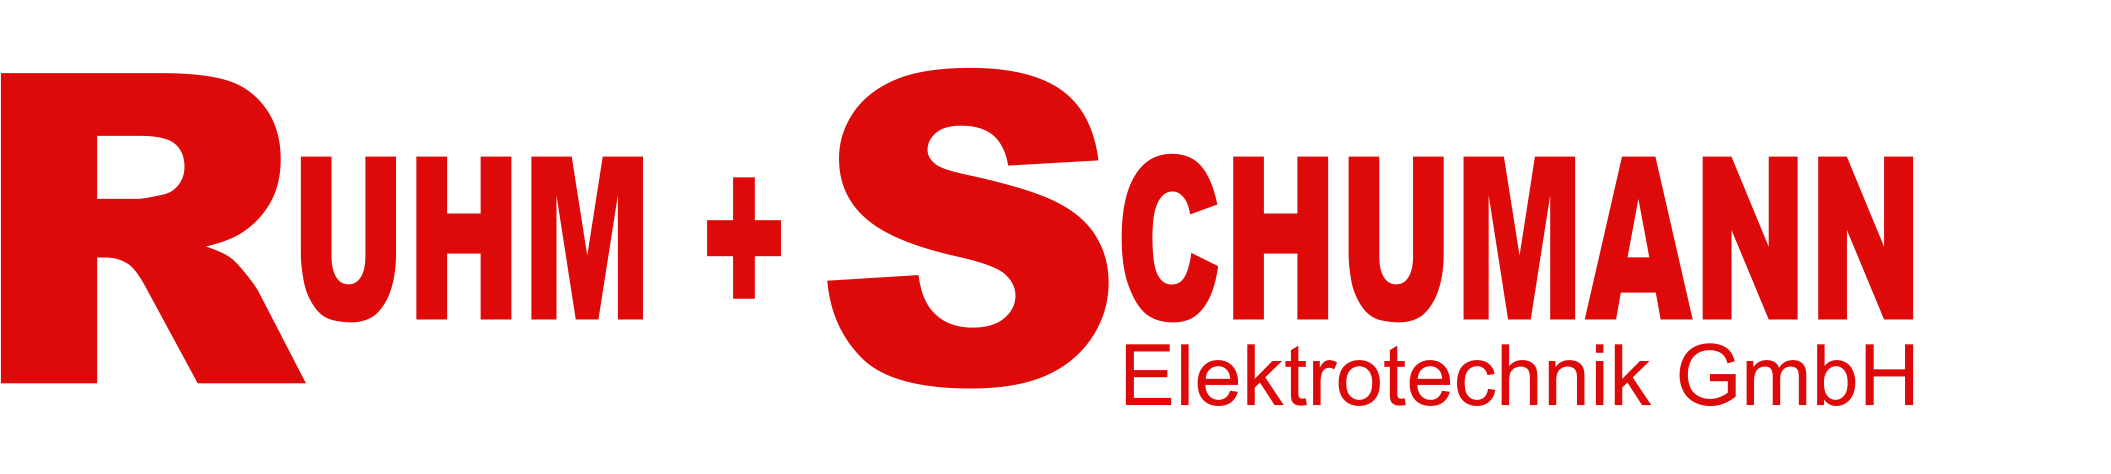 Ruhm+Schumann Elektrotechnik GmbH